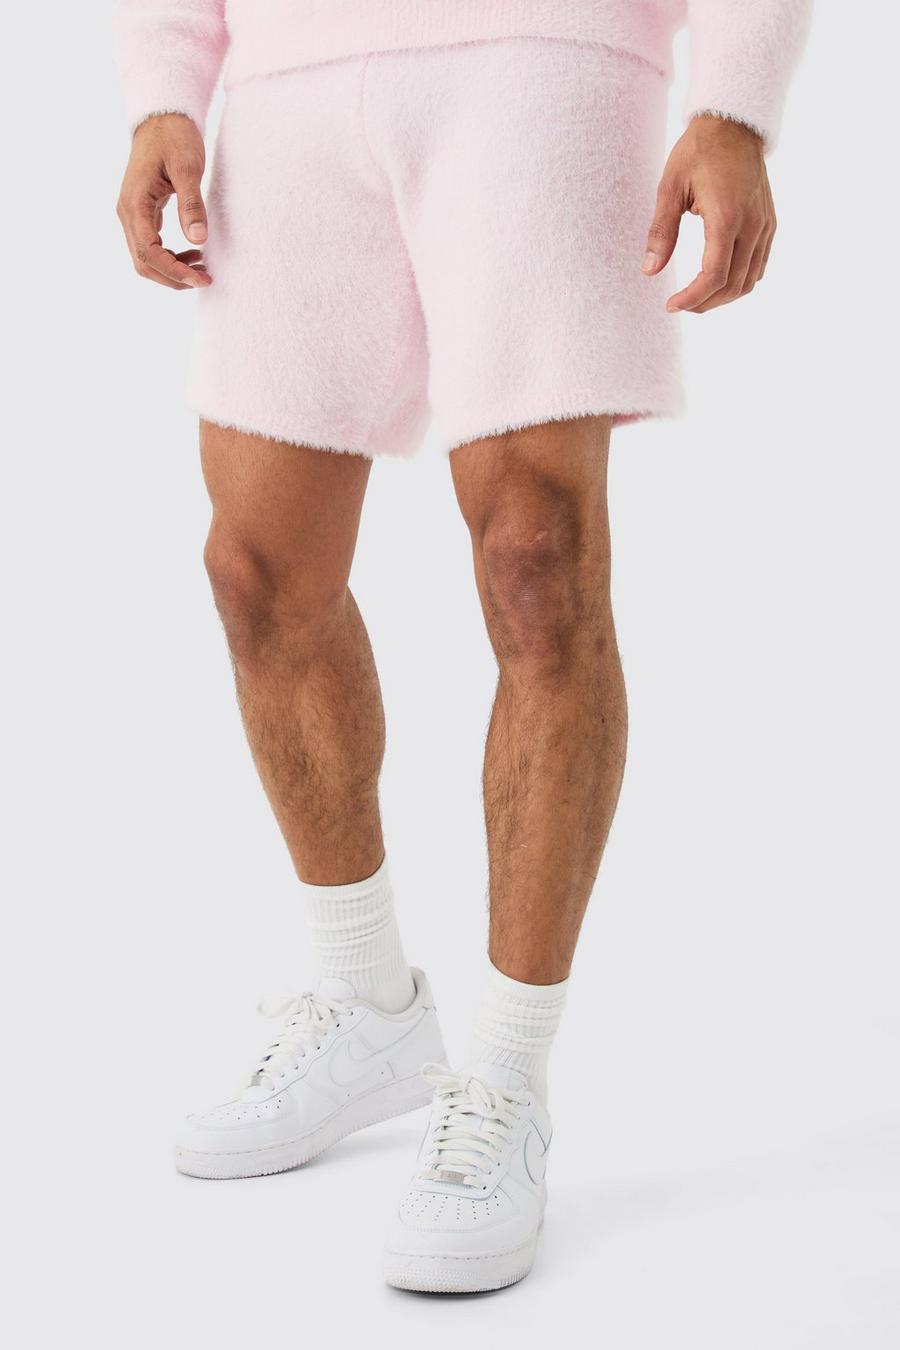 Lockere flauschige Shorts in Rosa, Light pink